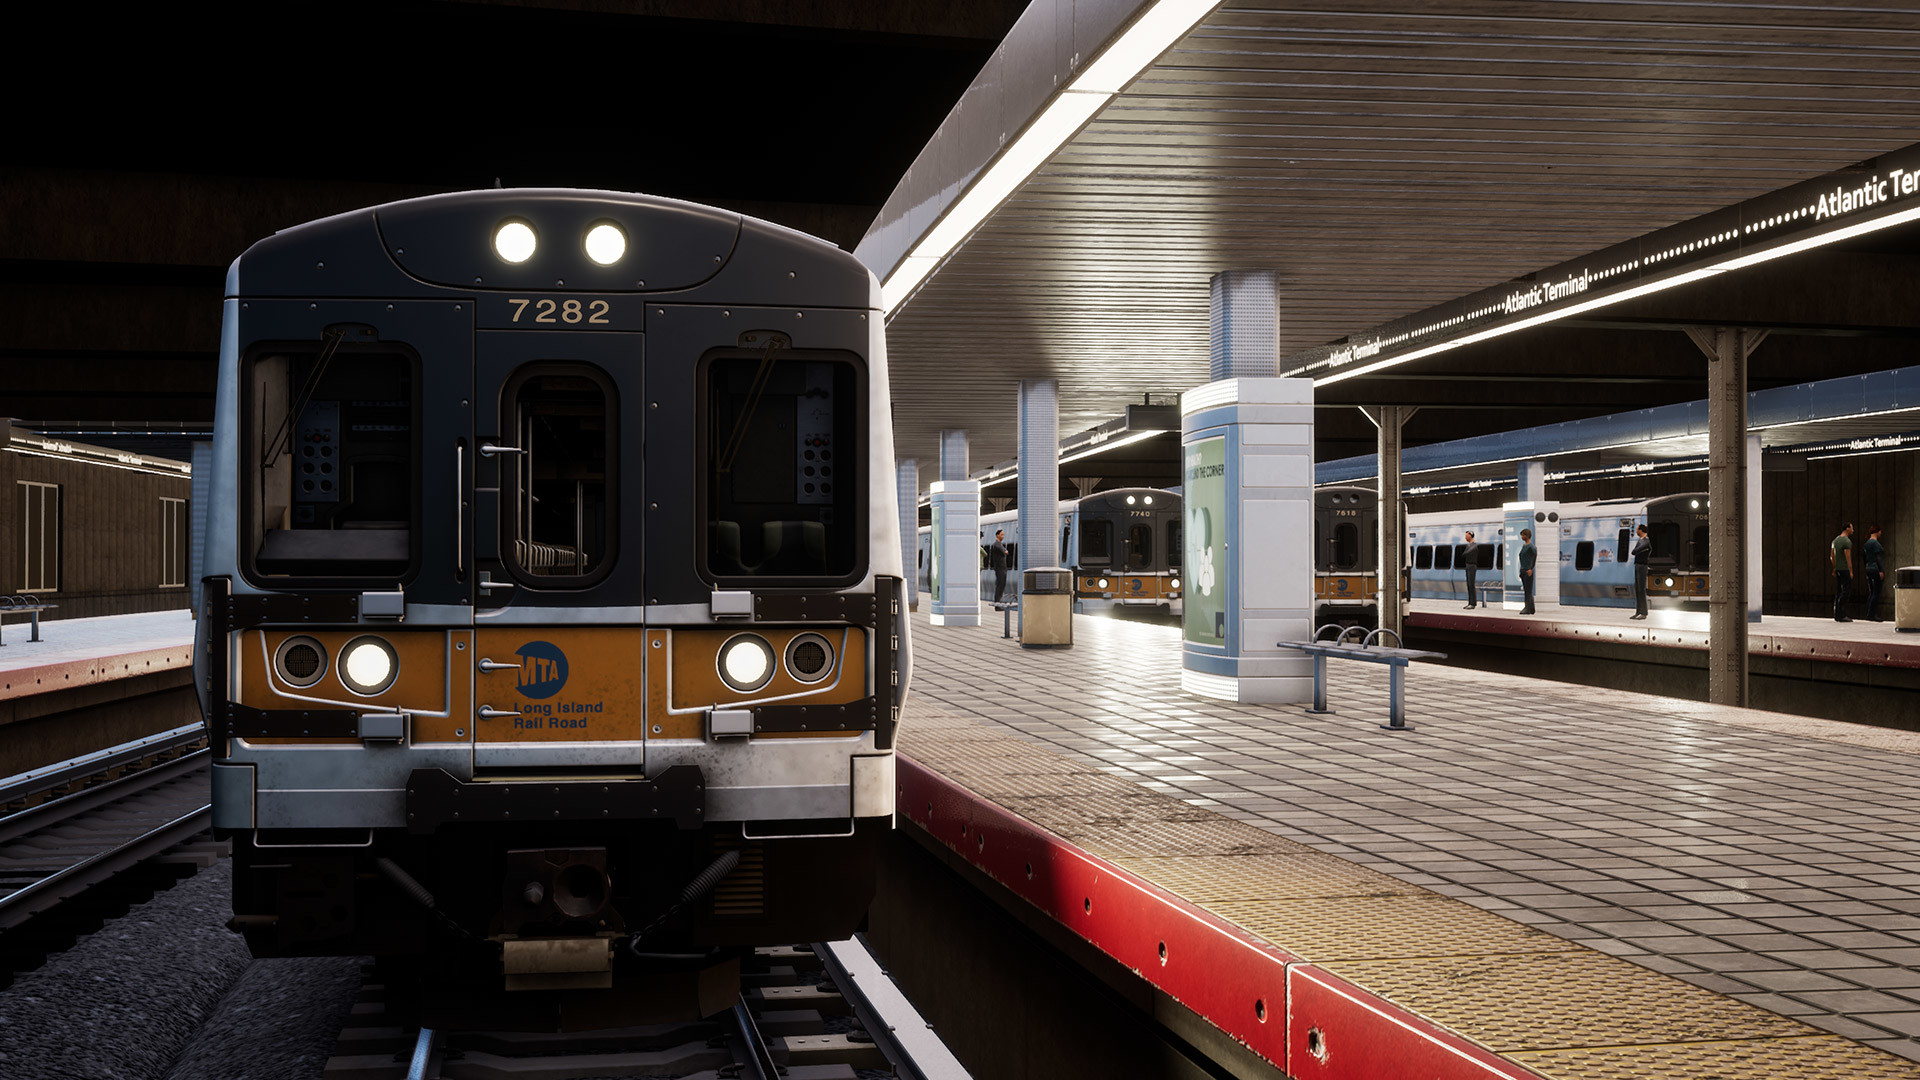 Train Sim World 2: Long Island Rail Road: New York - Hicksville Route Add-On DLC Steam CD Key